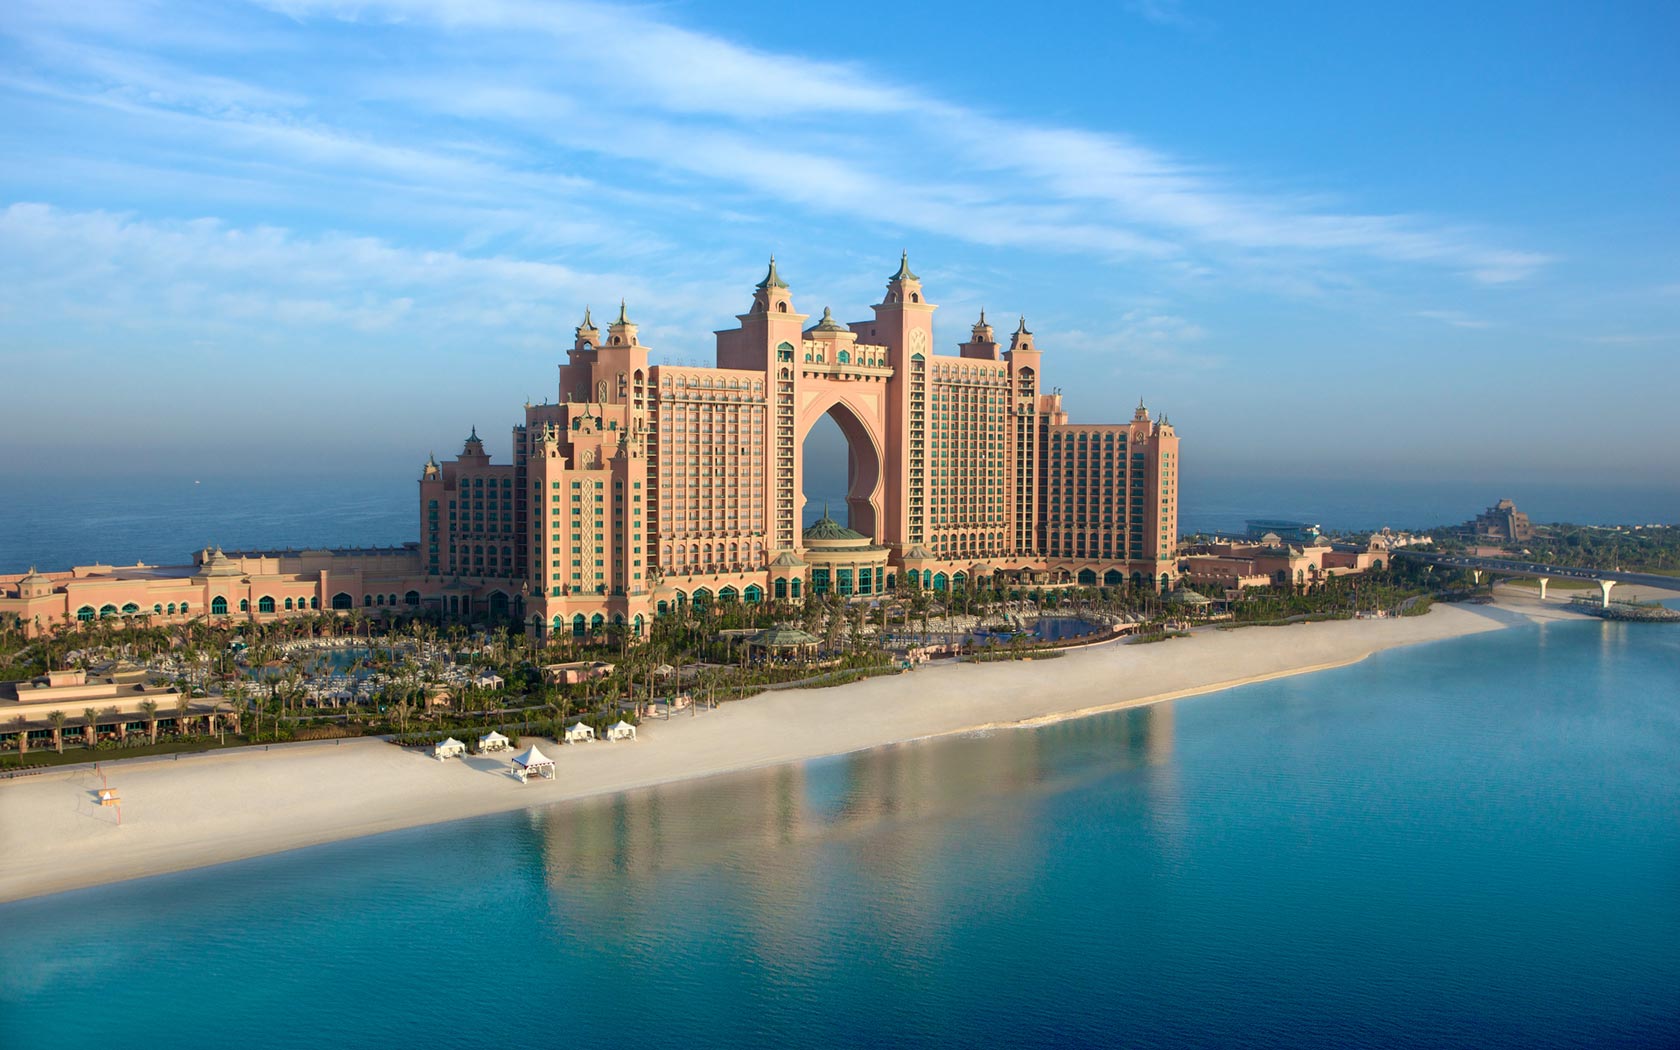 Atlantis Hotel Dubai HD Widescreen Wallpaper Source